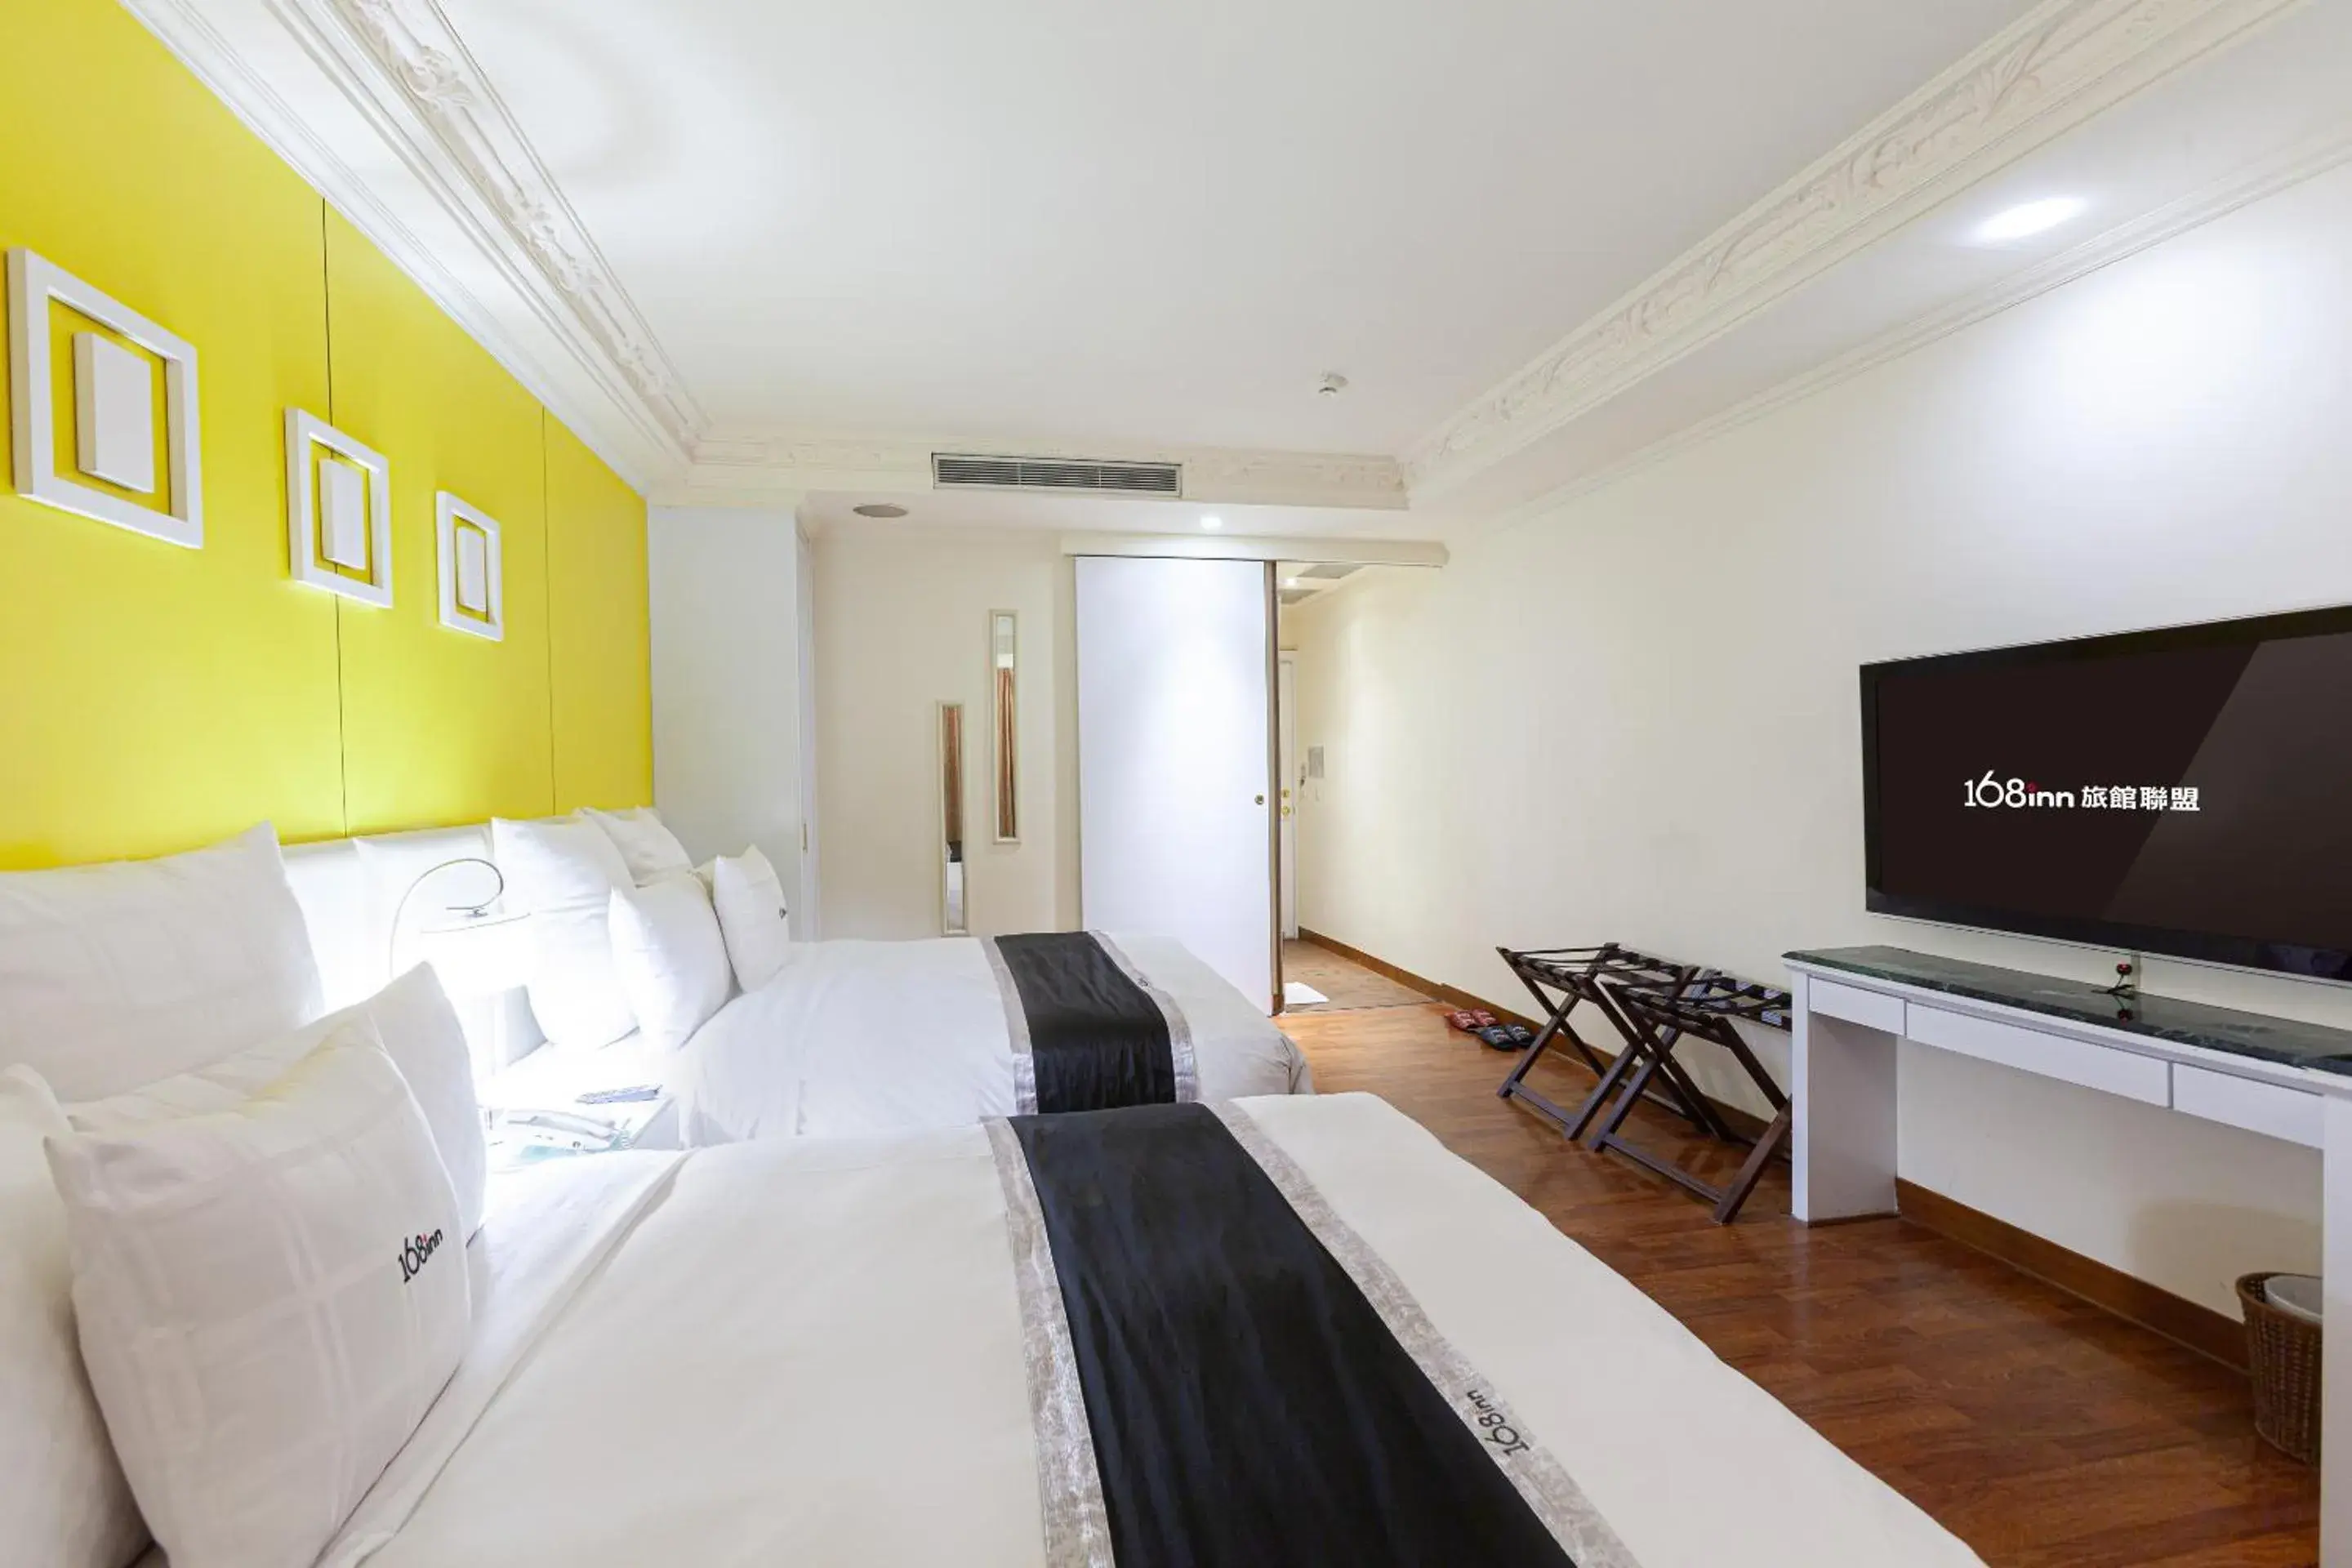 Bed in 168 Motel-PingZhen